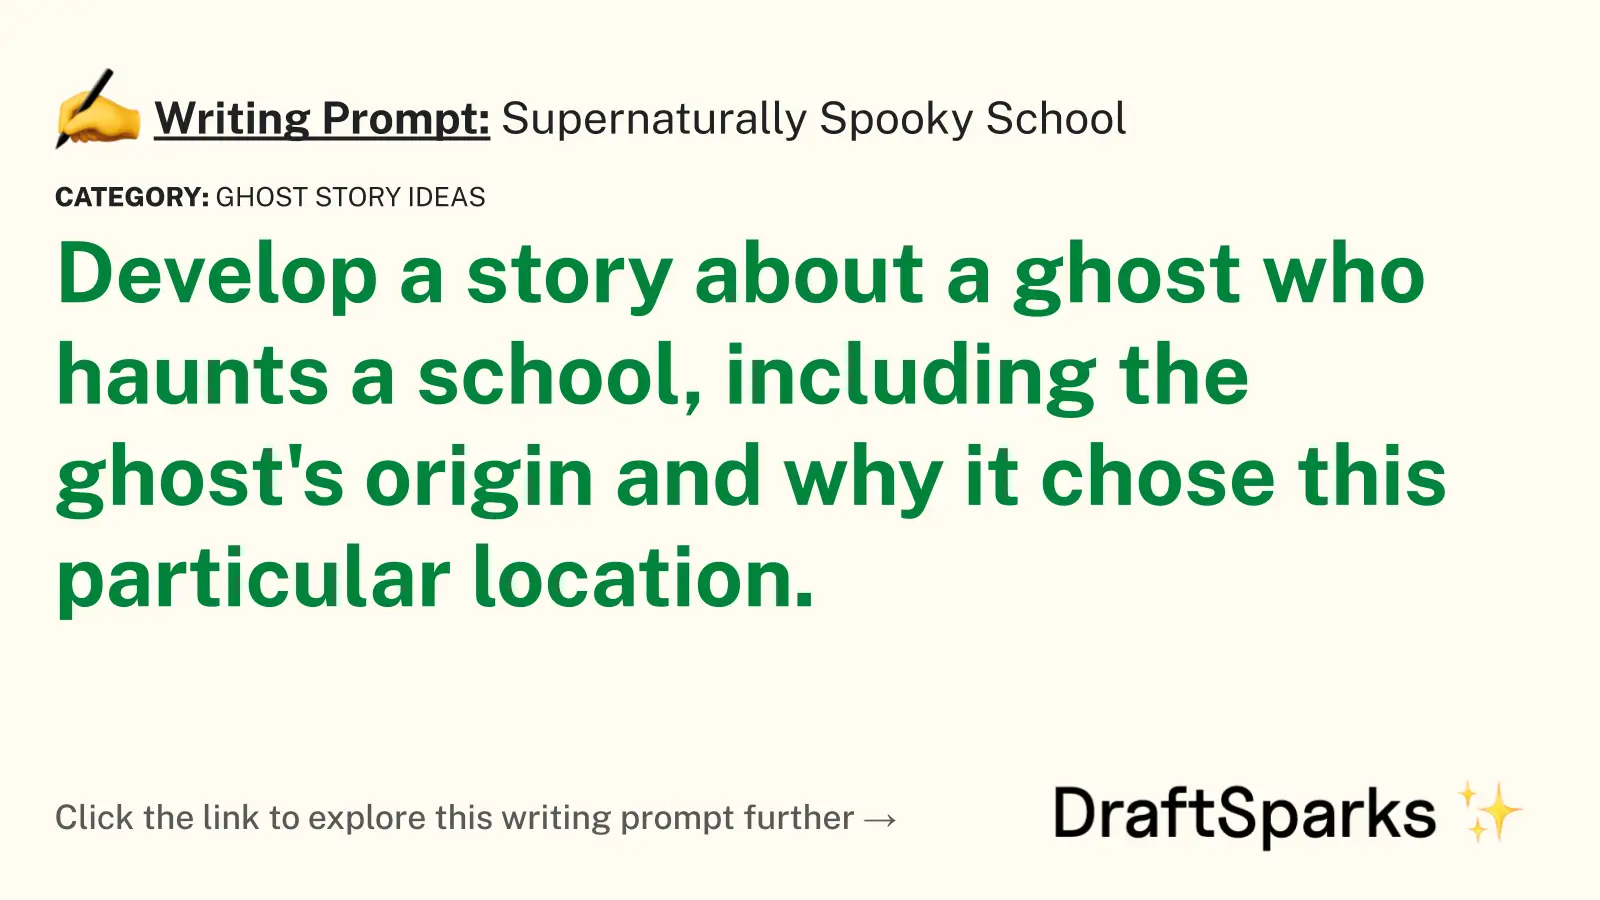 Supernaturally Spooky School